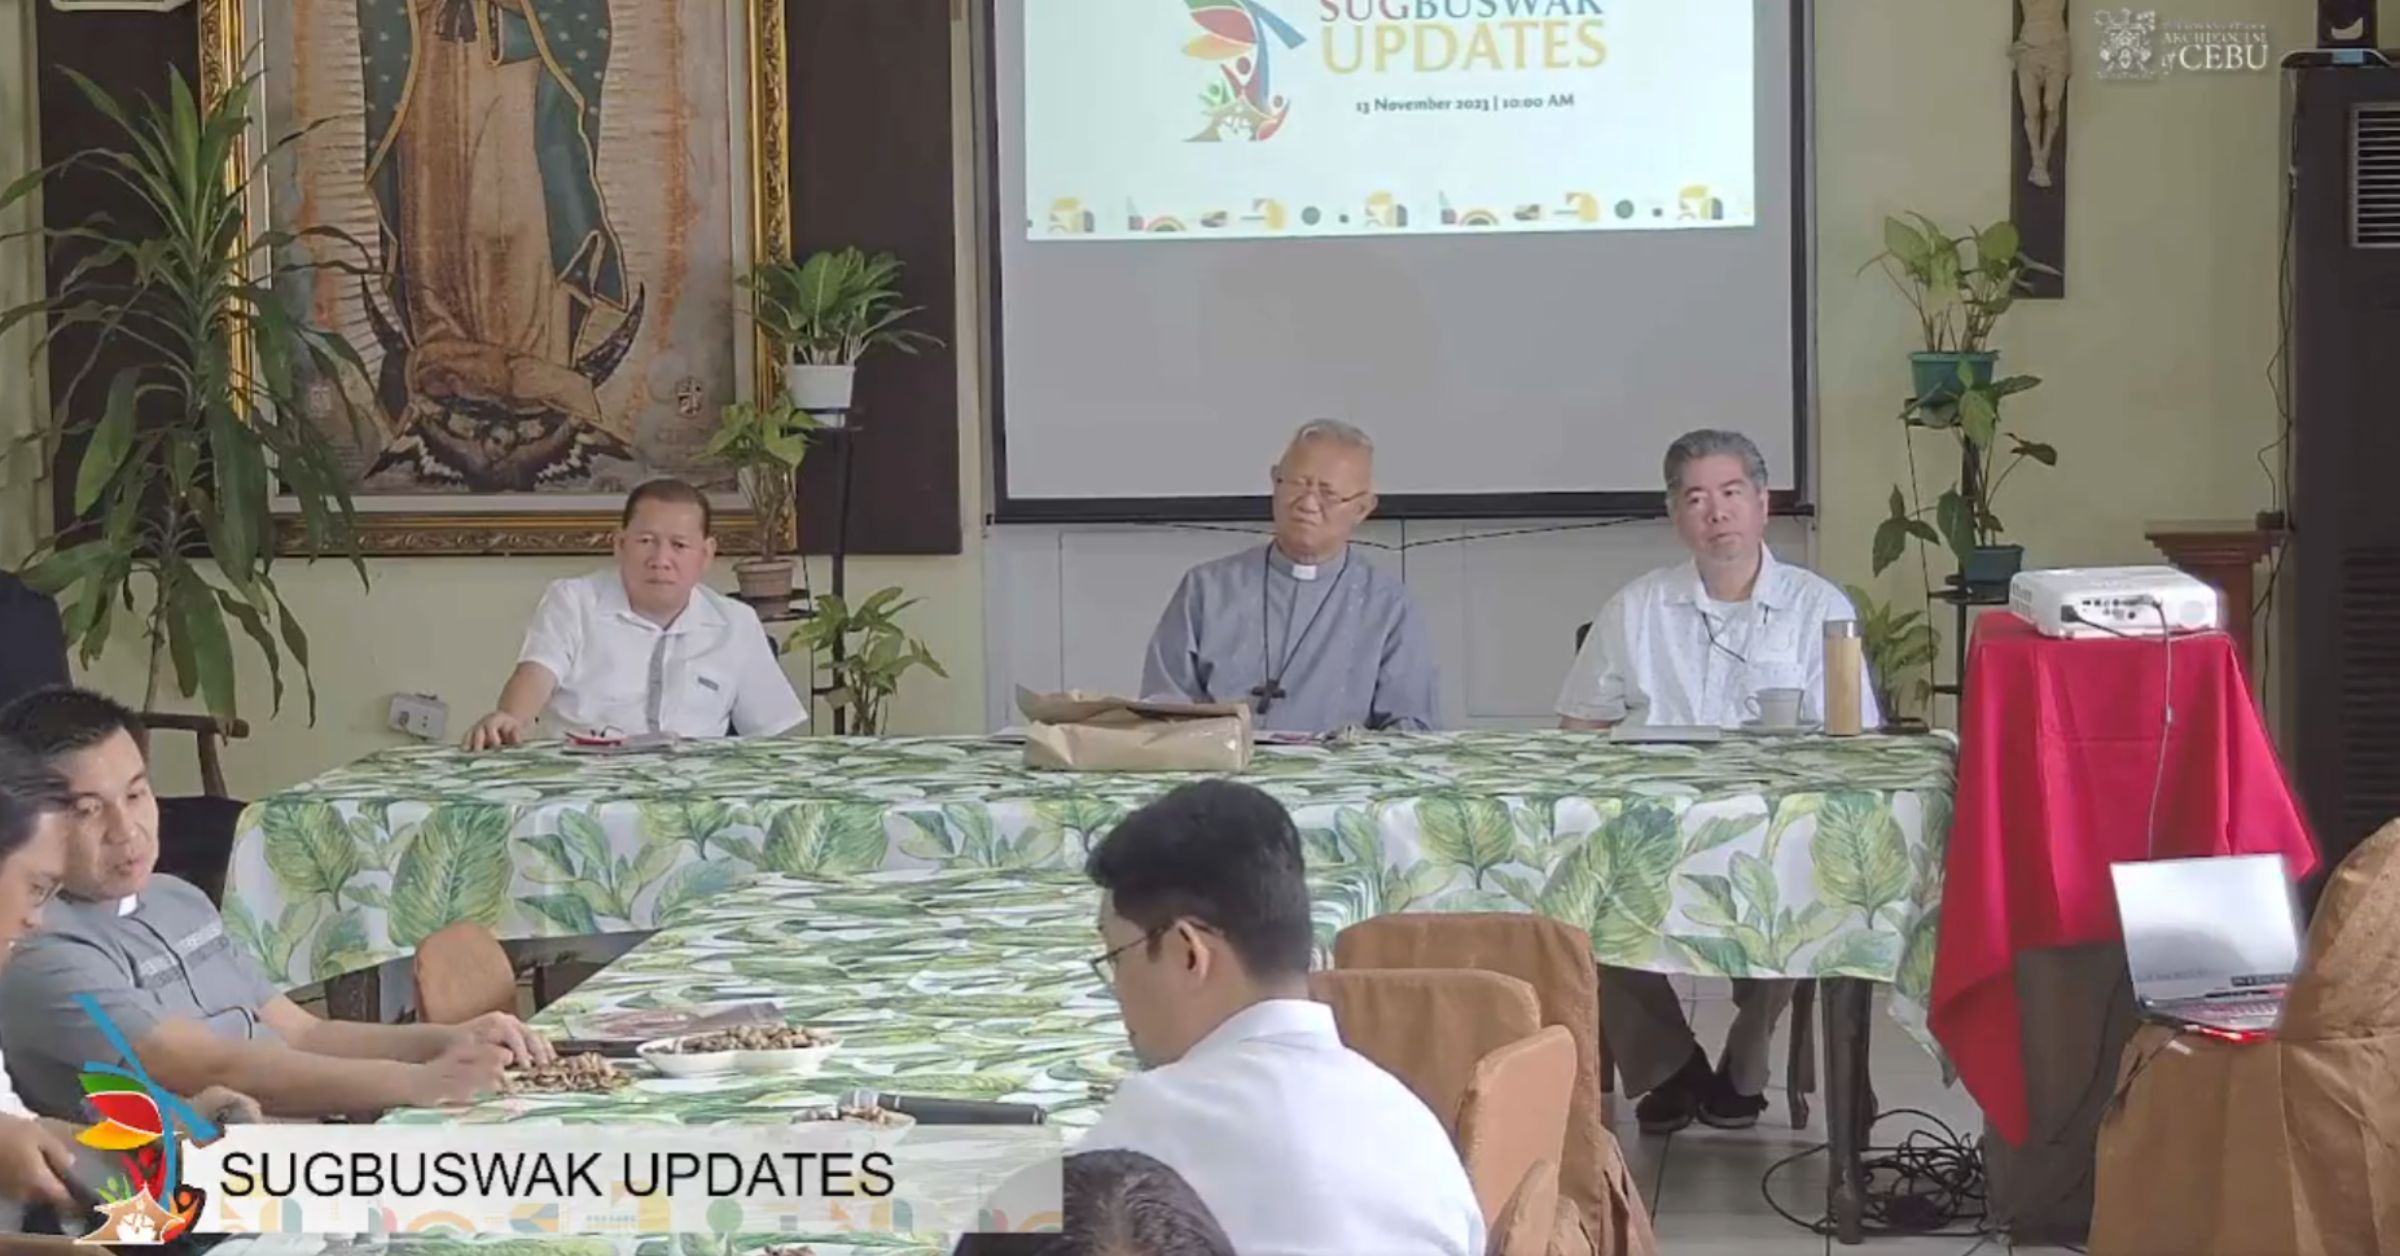 Archdiocese of Cebu slams door on media on Sugbuswak coverage